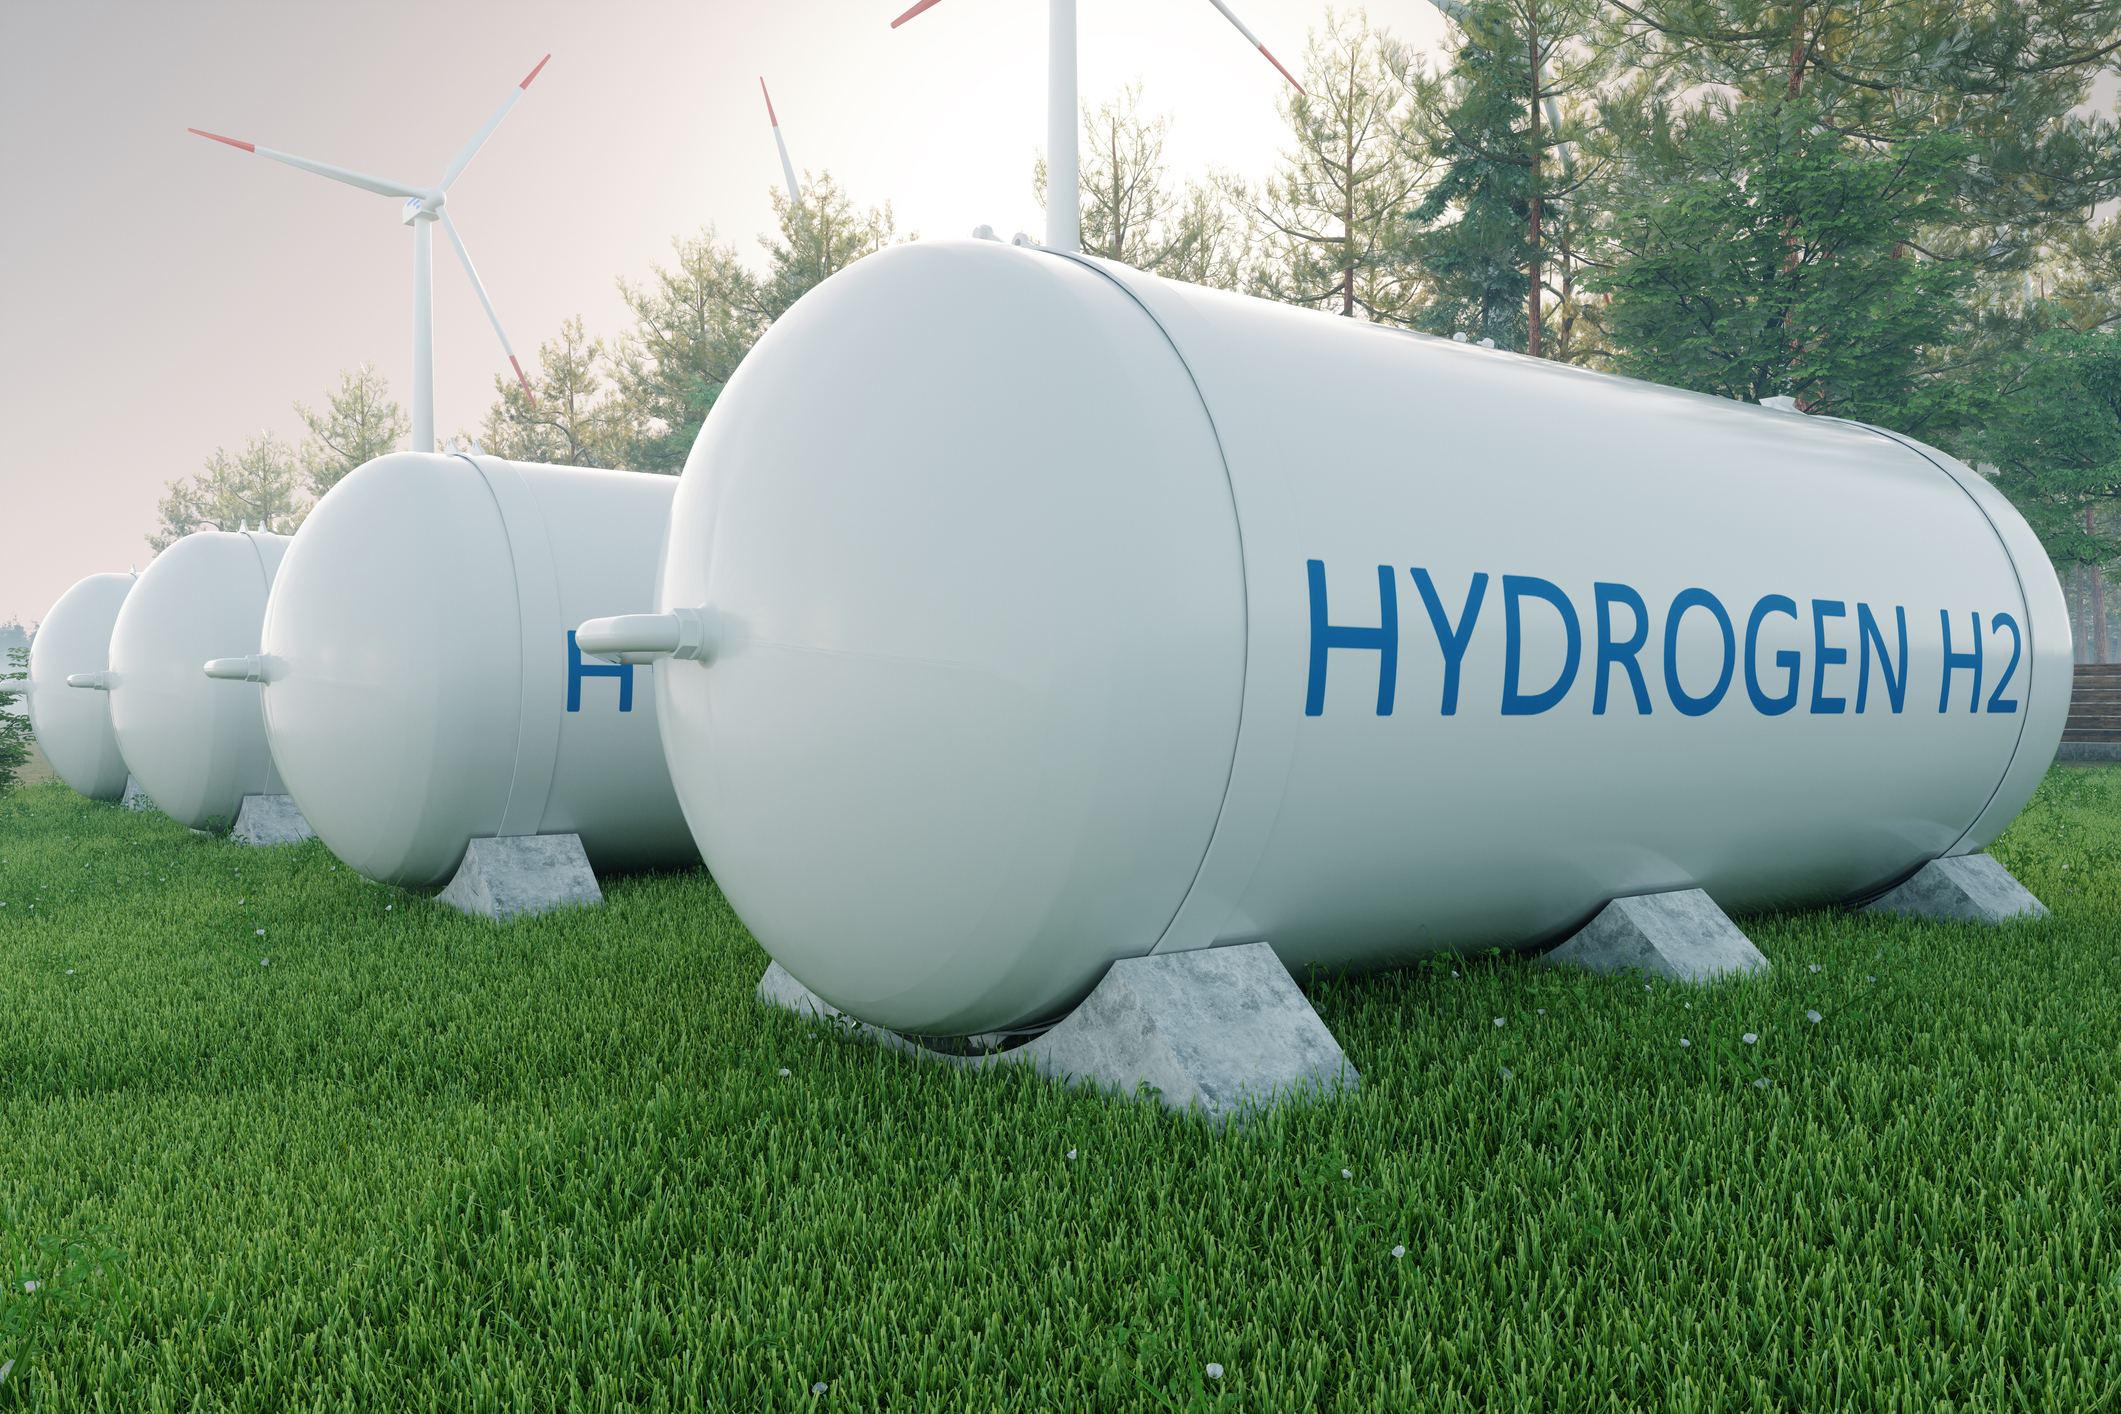 Japan earmarks $107 billion for developing hydrogen energy